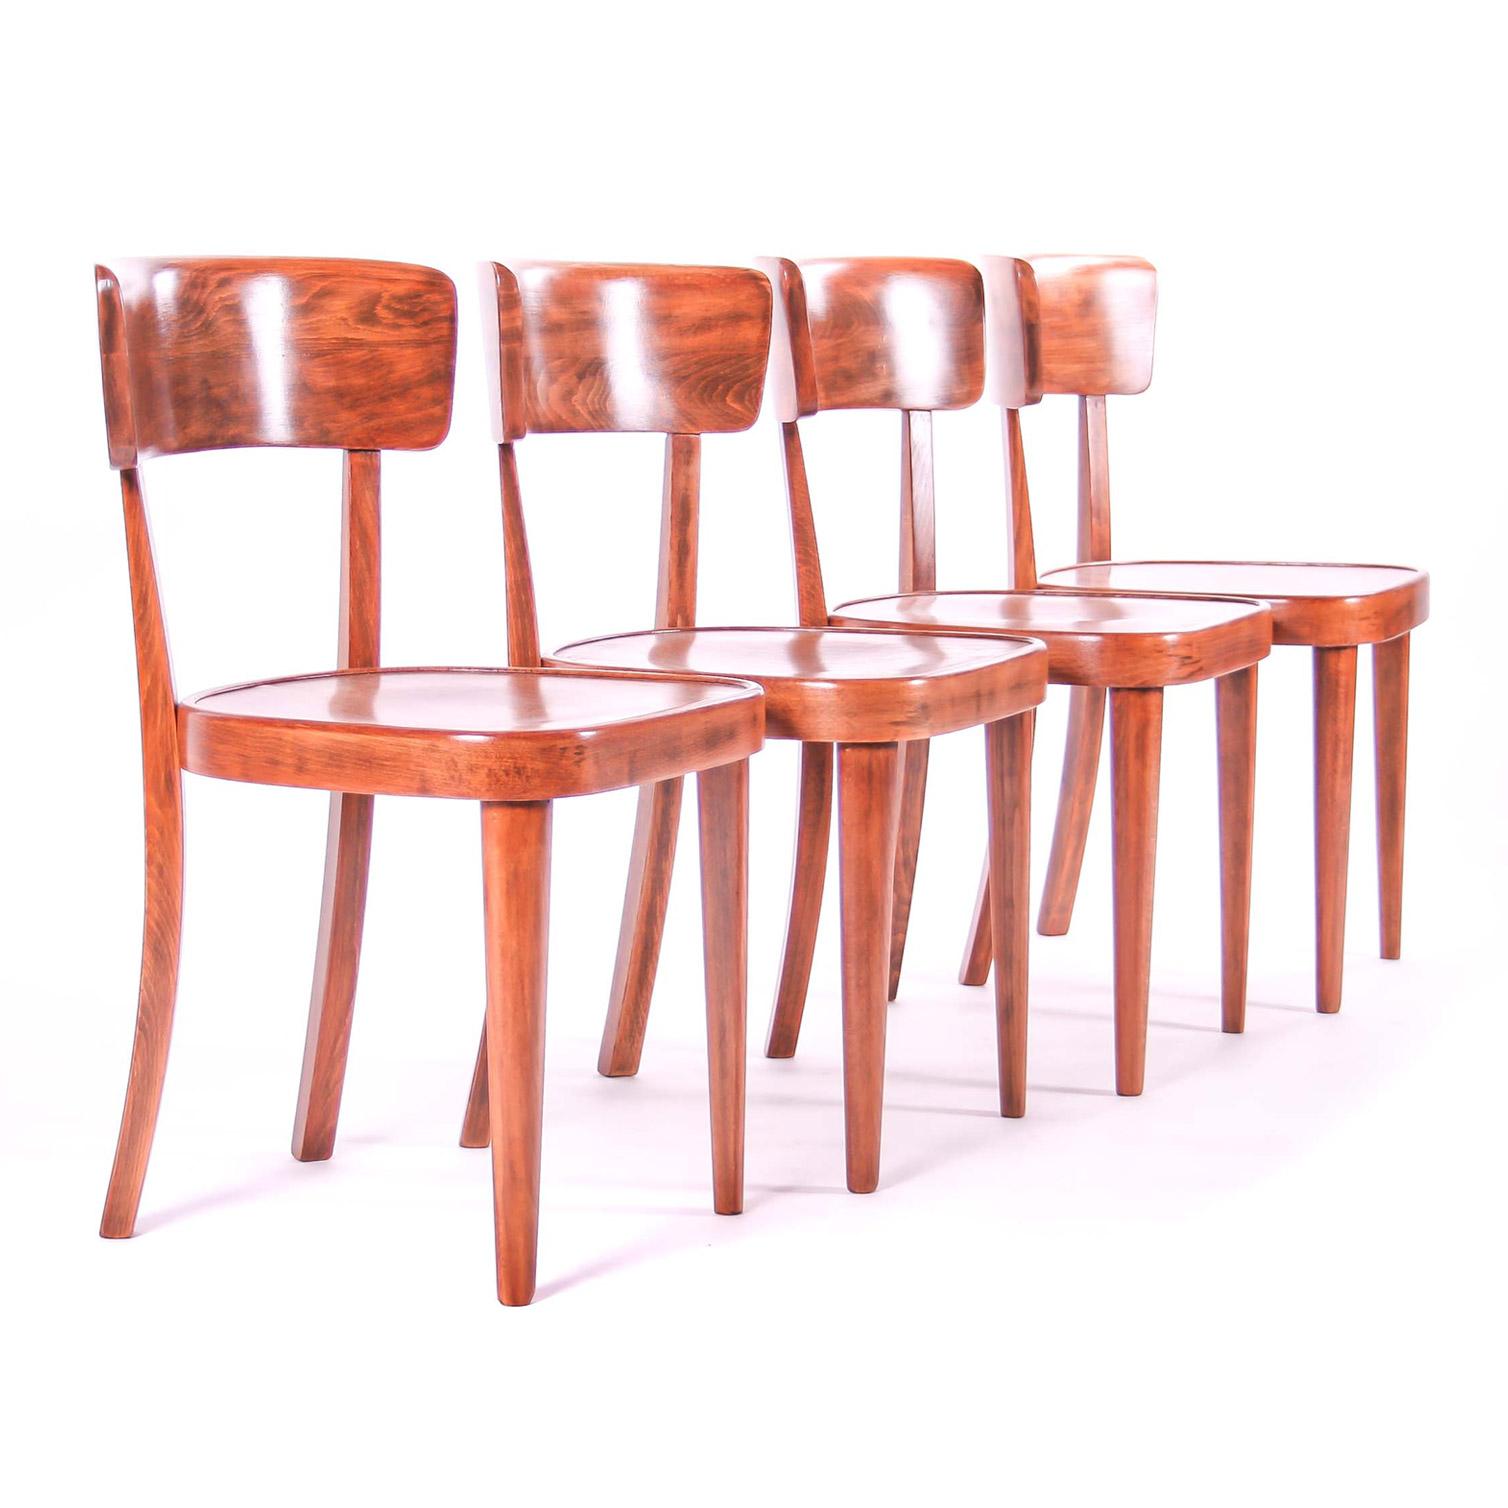 Other Czech Interwar Avantgard Design Dining Chairs by Jindrich Halabala 'Up Zavody' For Sale